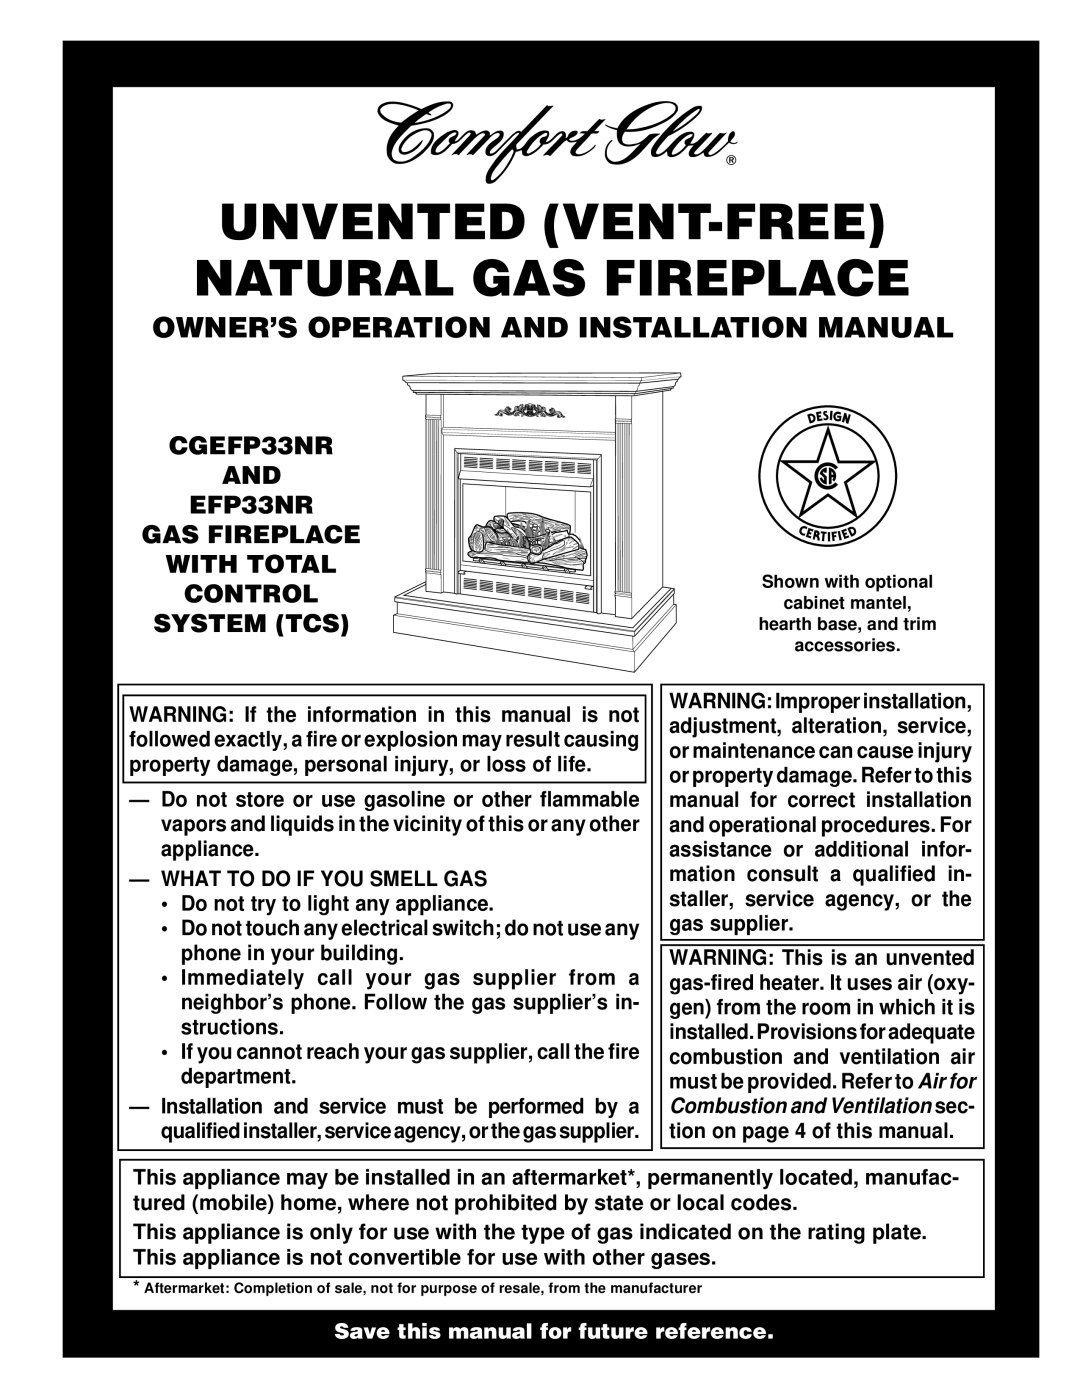 Desa CGEFP33NR installation manual Owner’S Operation And Installation Manual, What To Do If You Smell Gas 